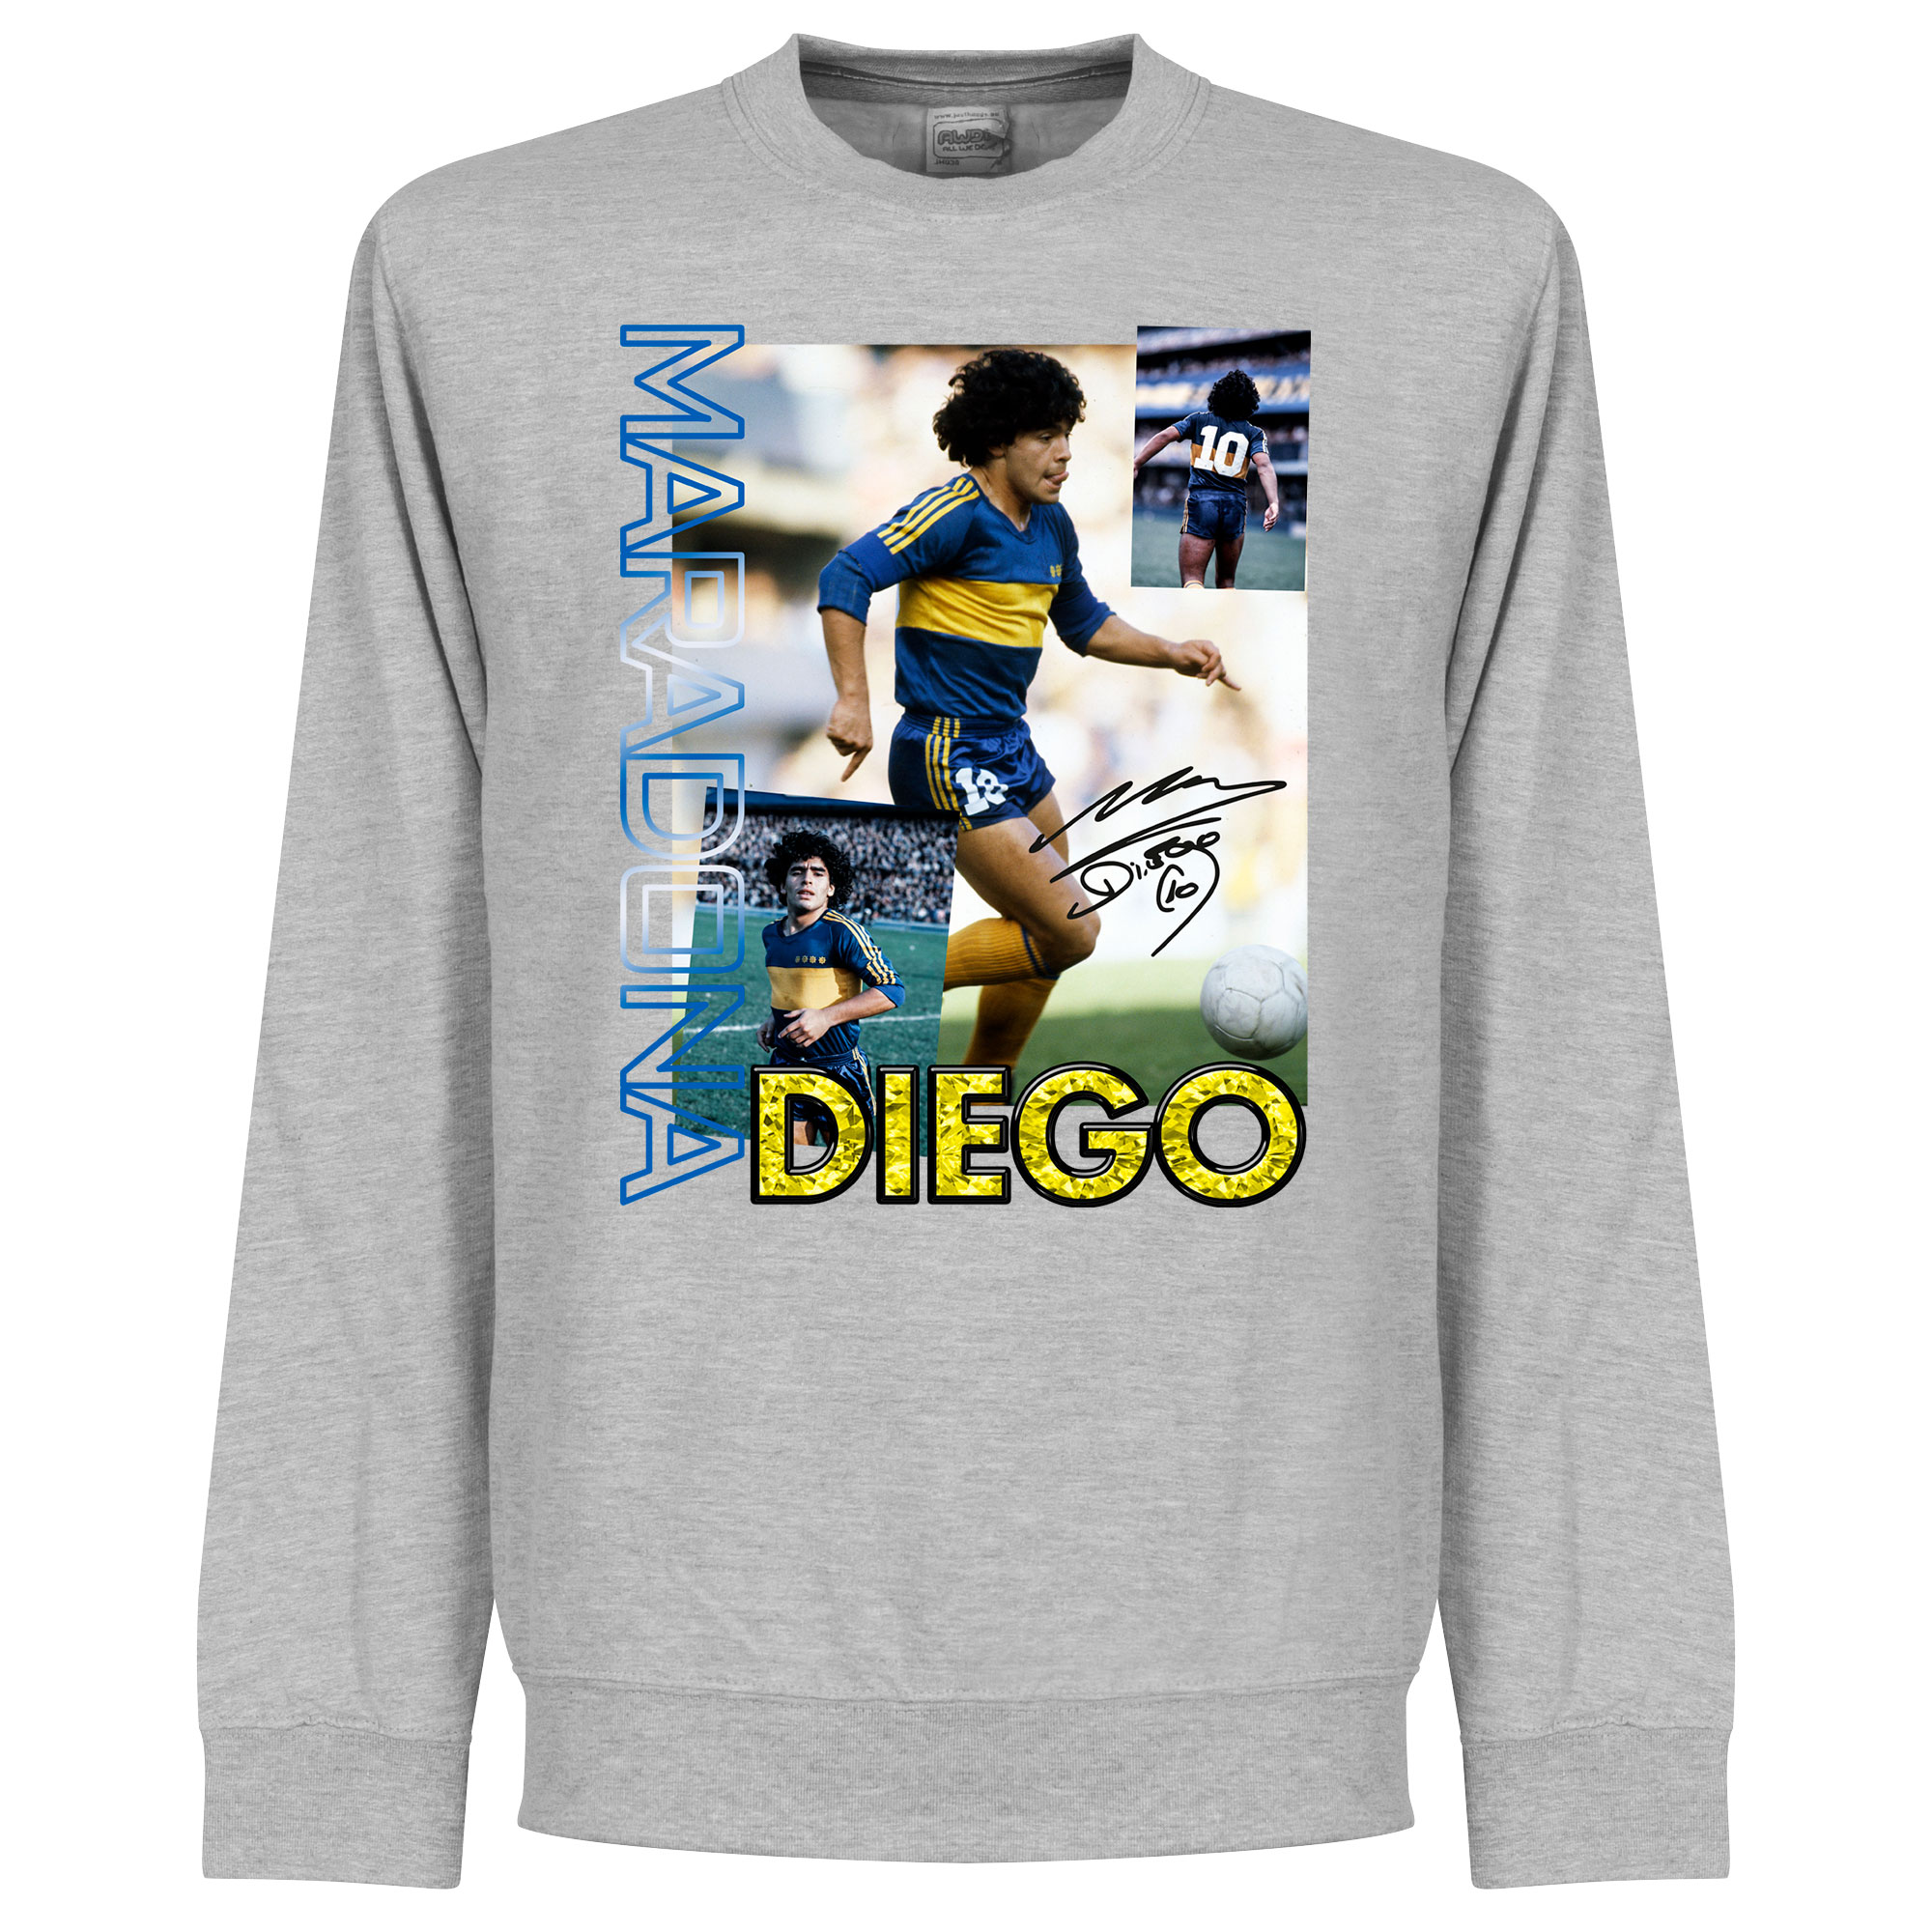 Diego Maradona Boca Old Skool Sweater - Grijs - XL